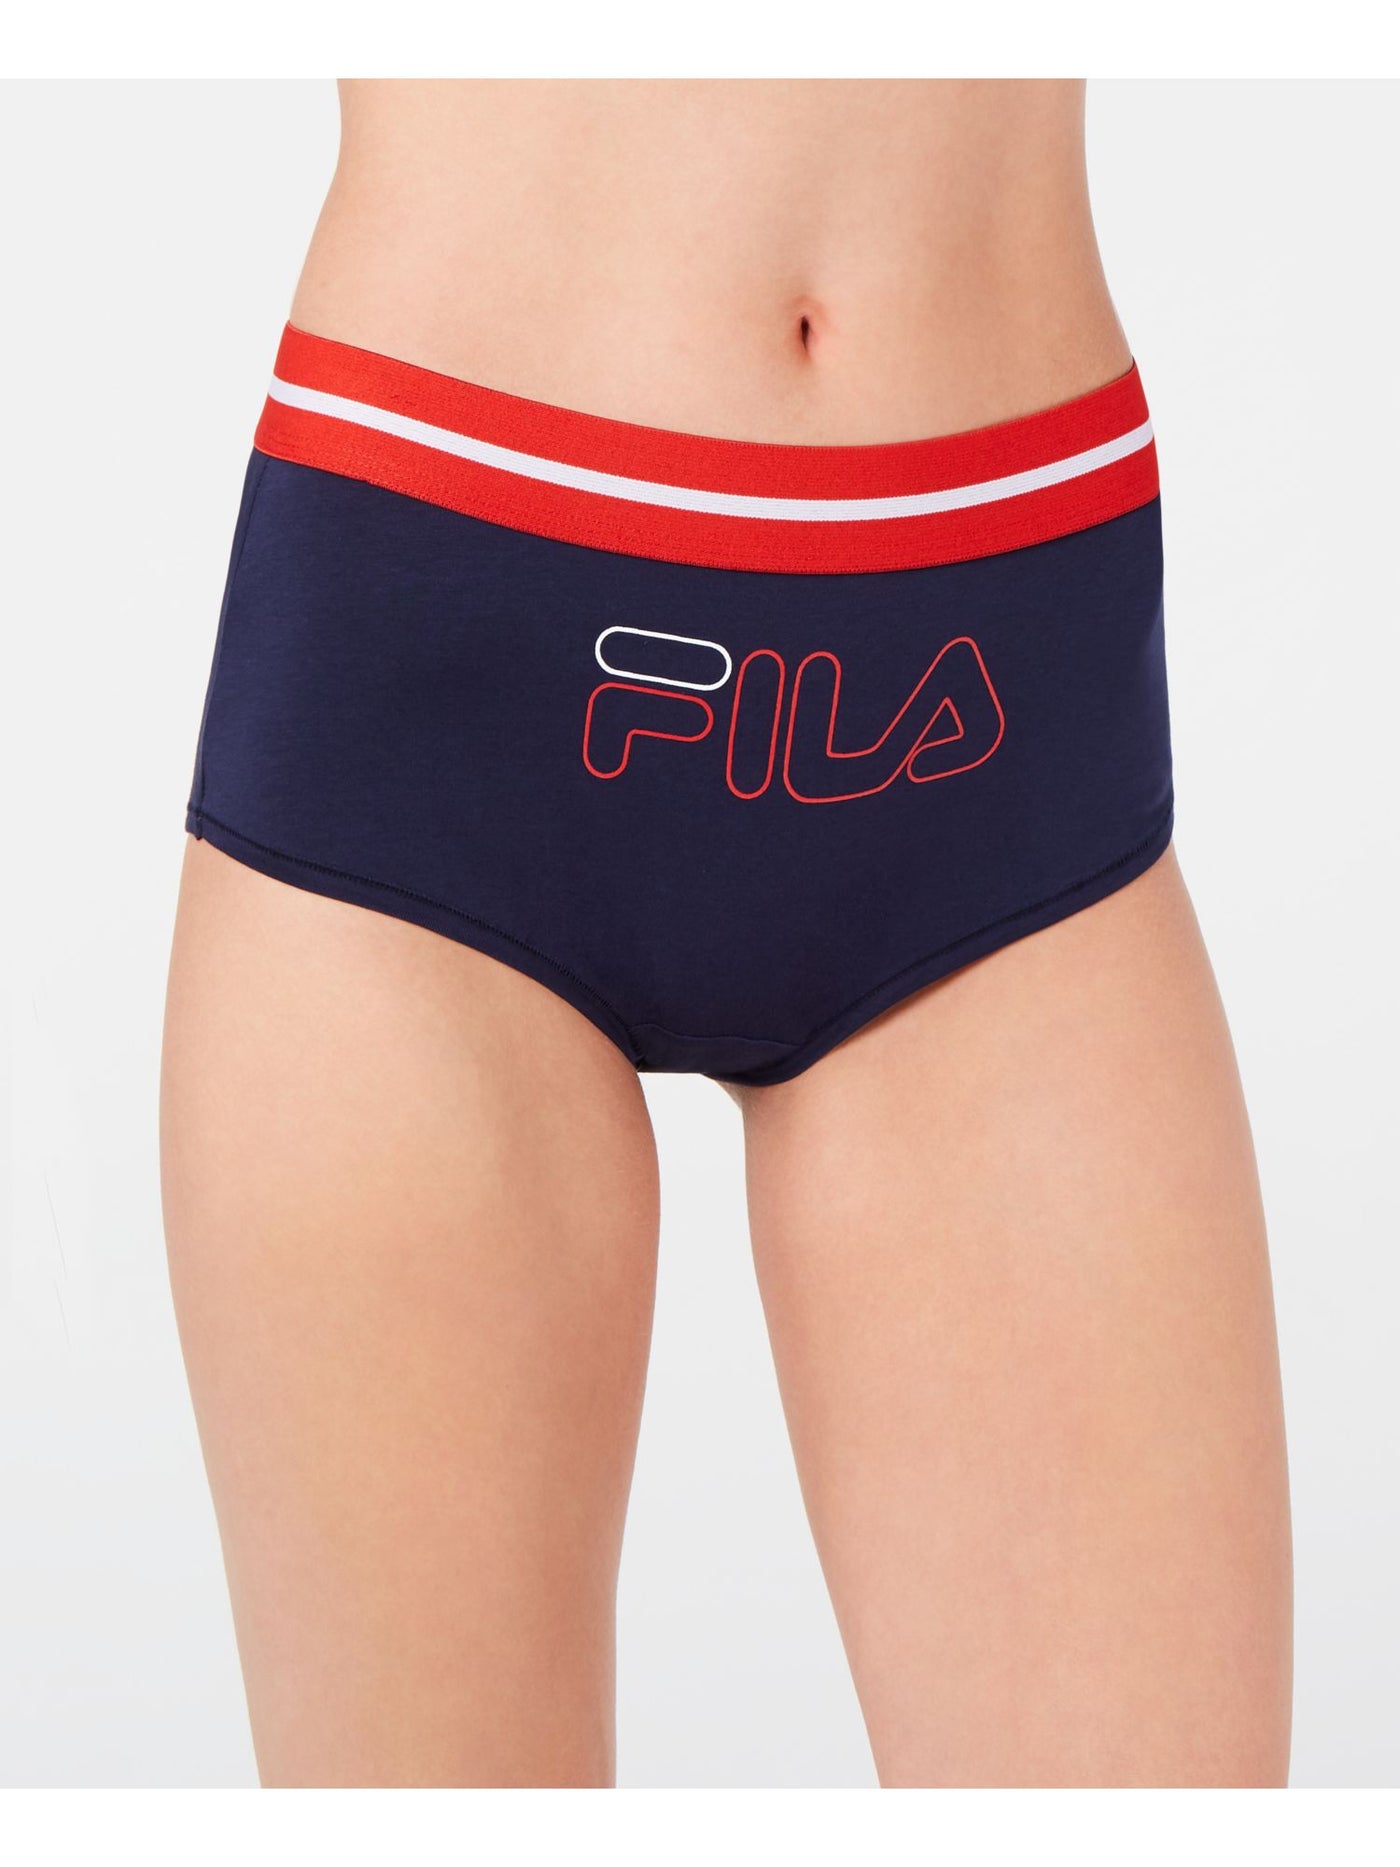 FILA Intimates Navy Everyday Hipster Underwear Size: M